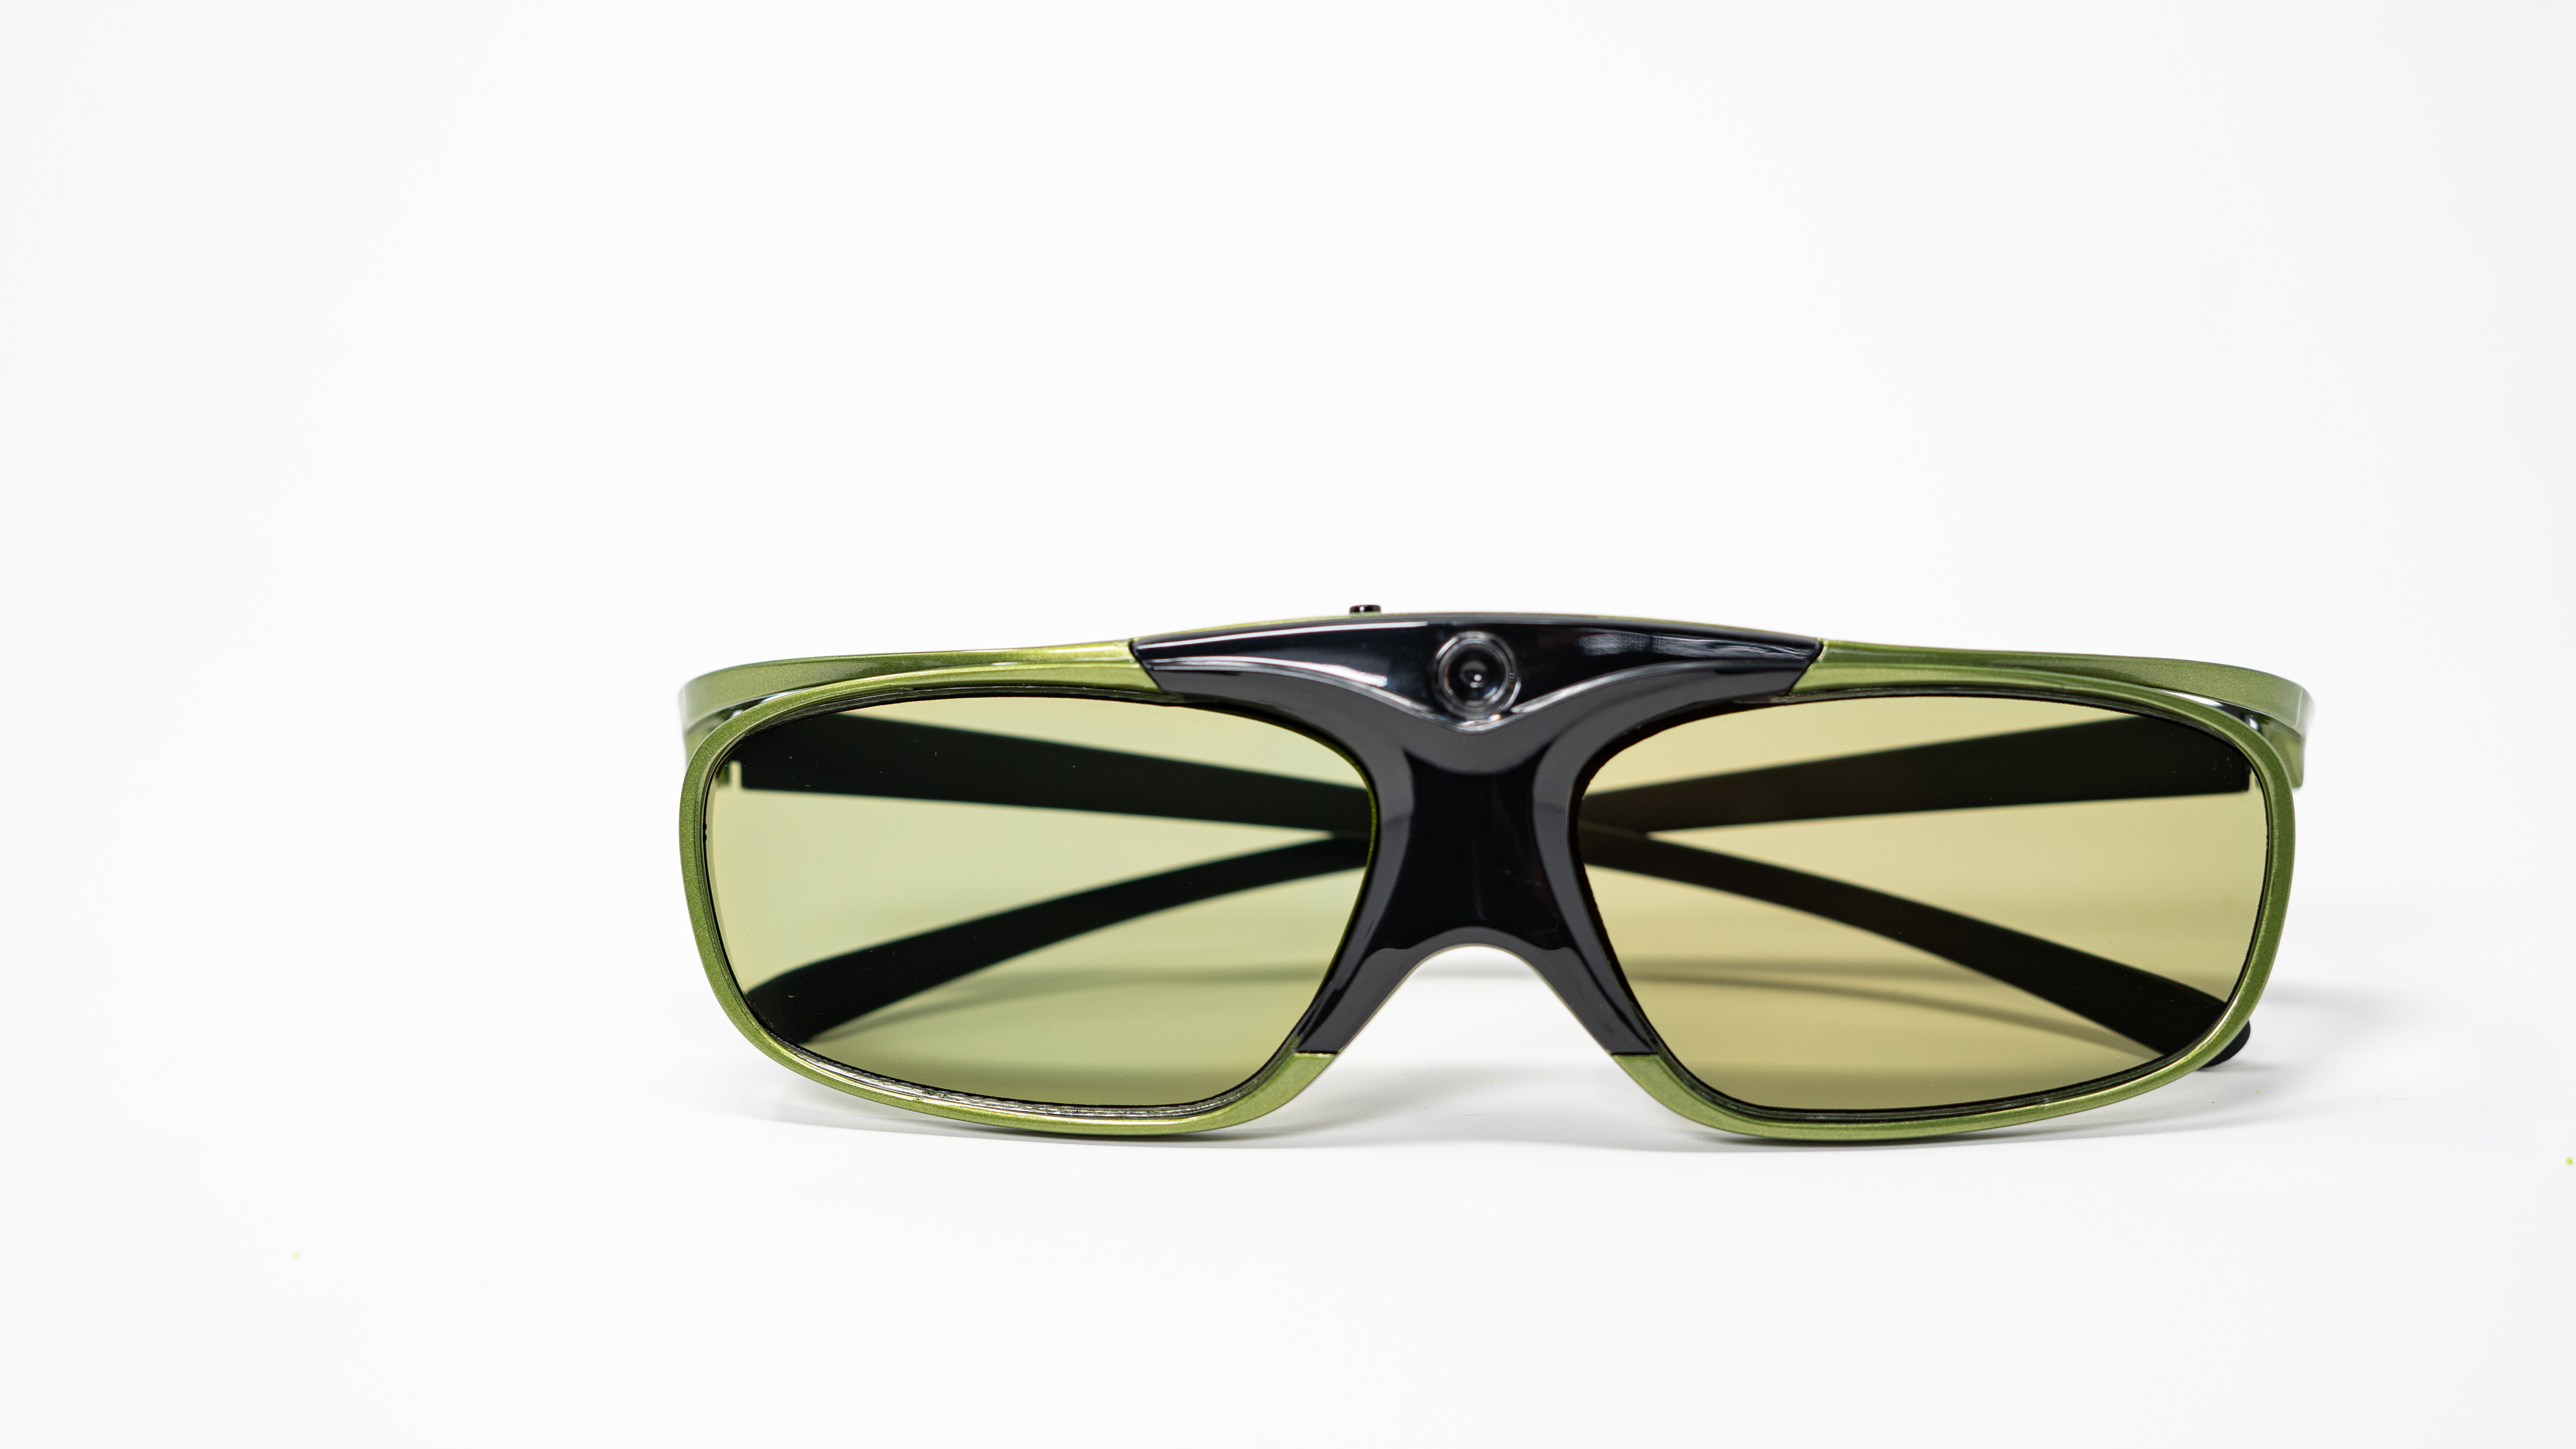 HI-SHOCK DLP Pro Lime Heaven DLP grün - 3D für - - wiederaufladbar Brille LINK 3D Beamer DLP